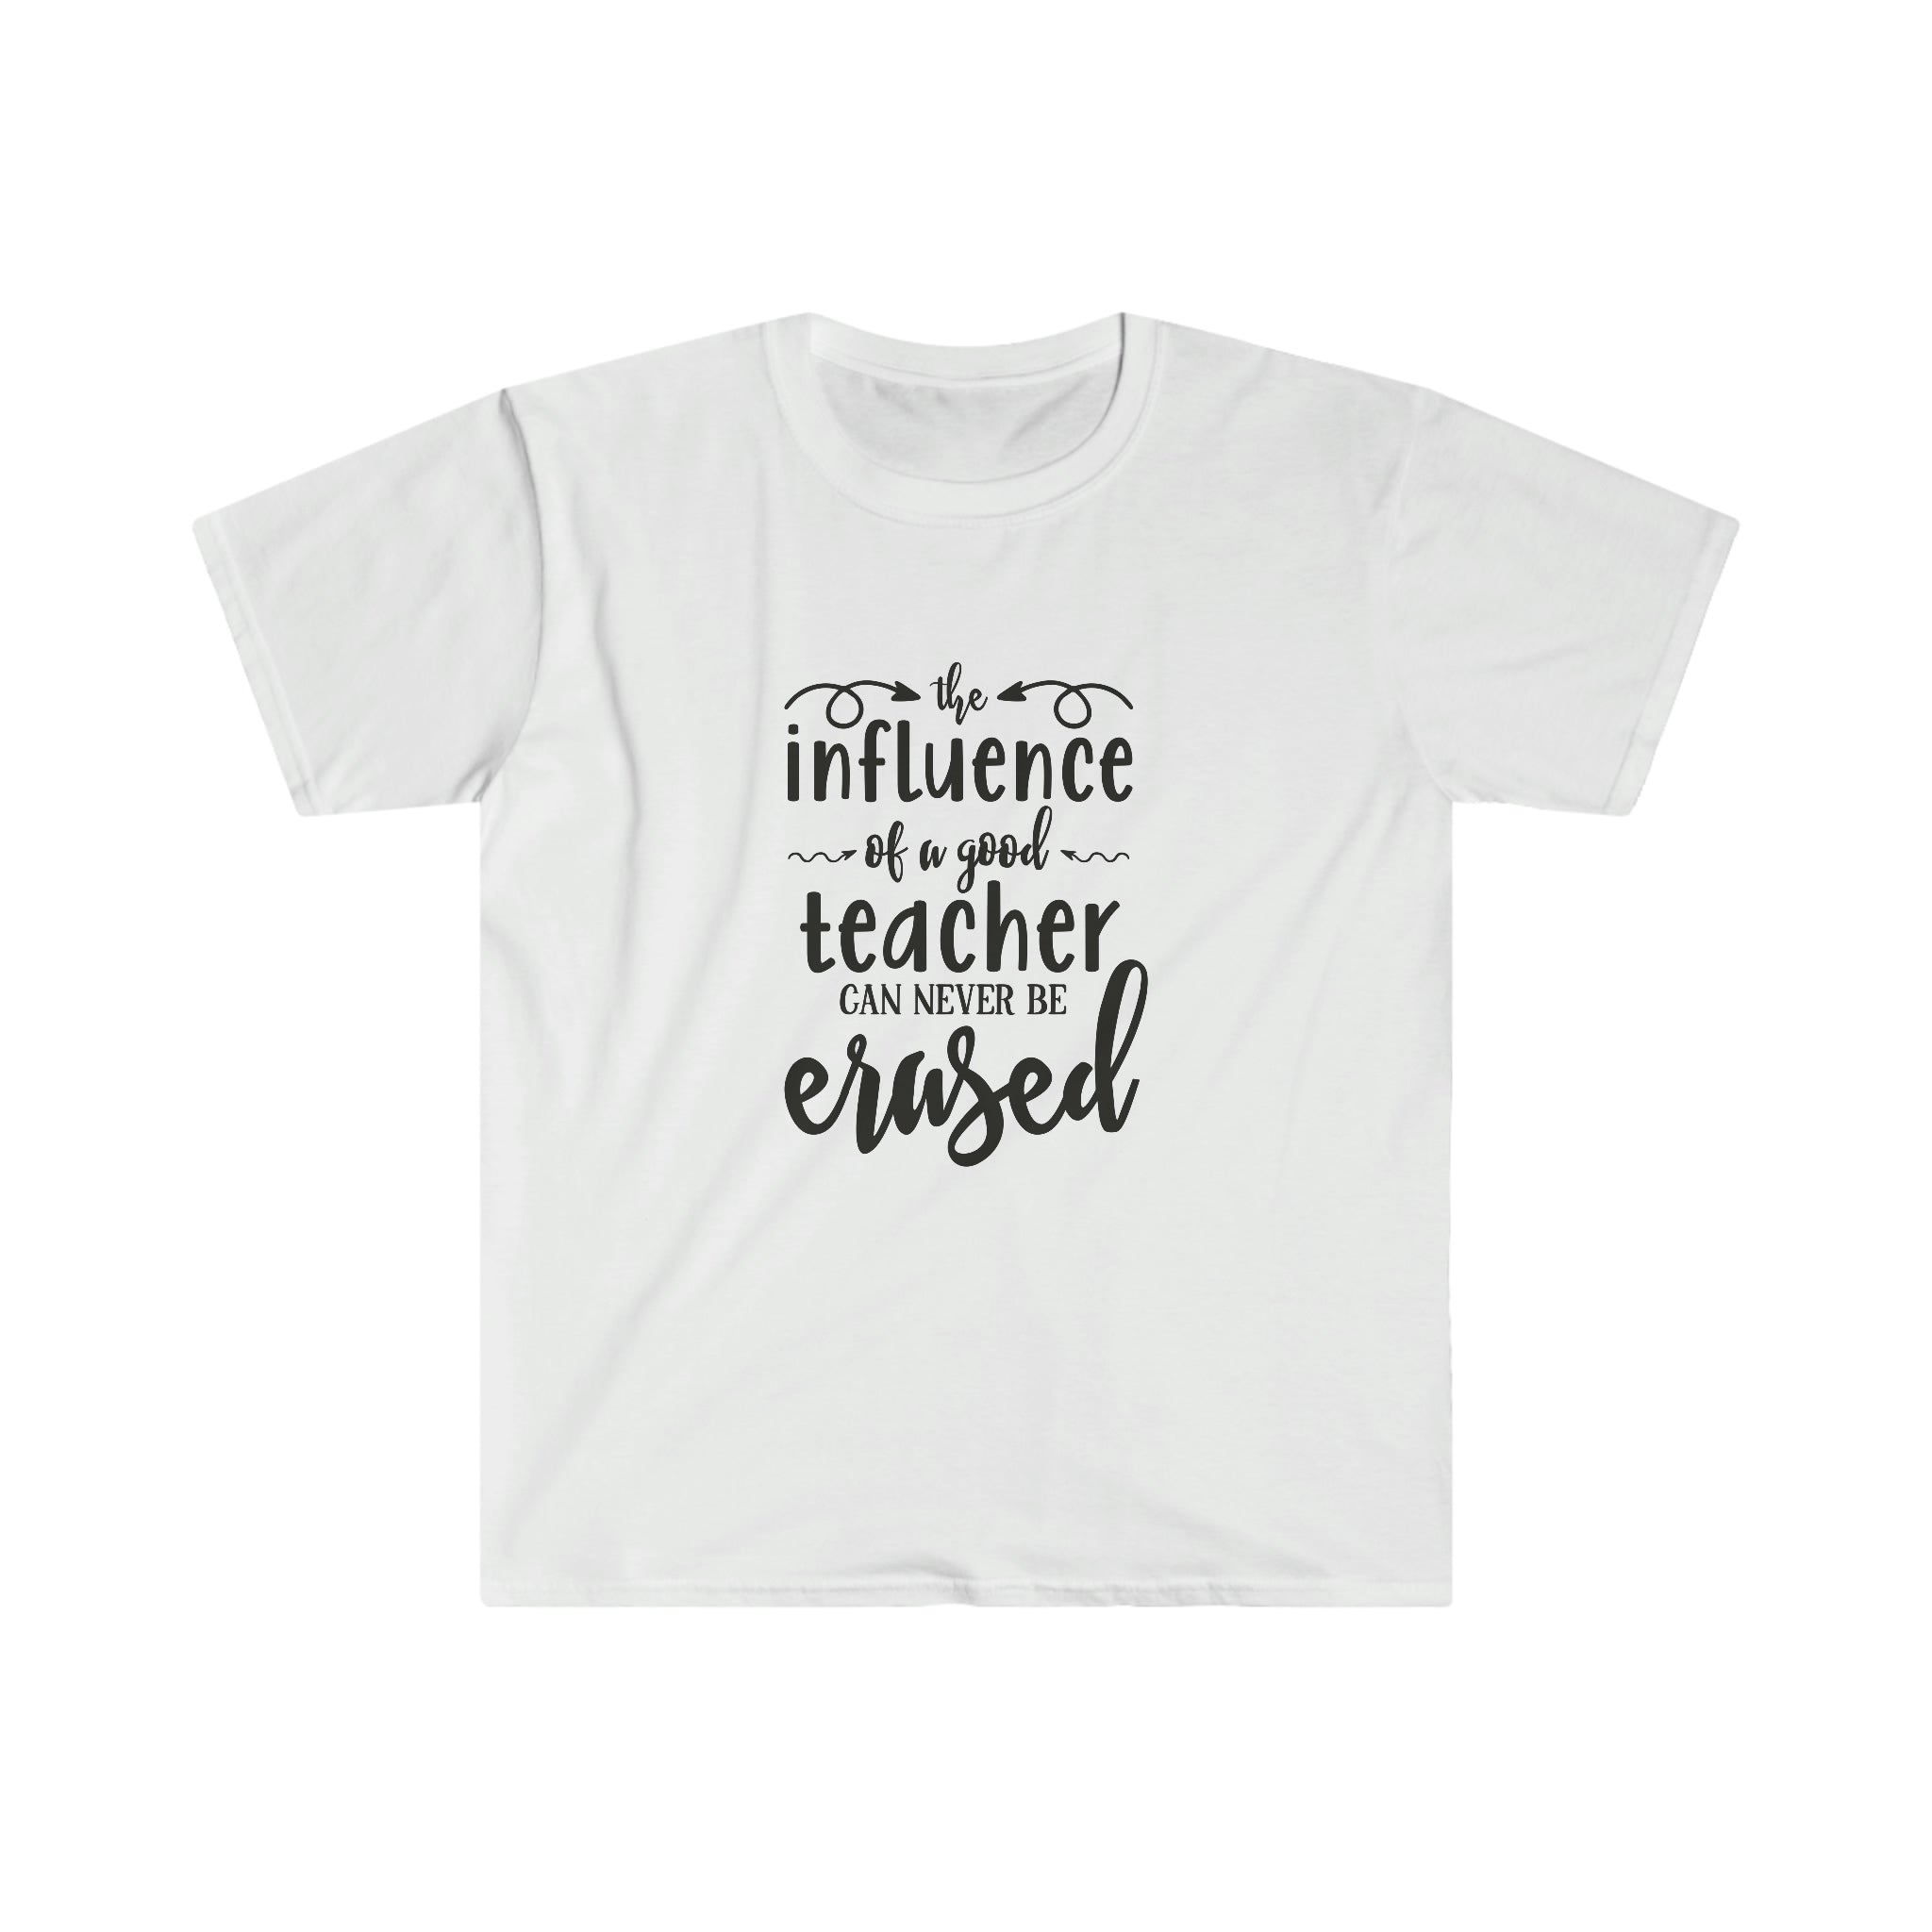 The Influence of a Good Teacher T-Shirt that says "Influence Teacher" is erased.